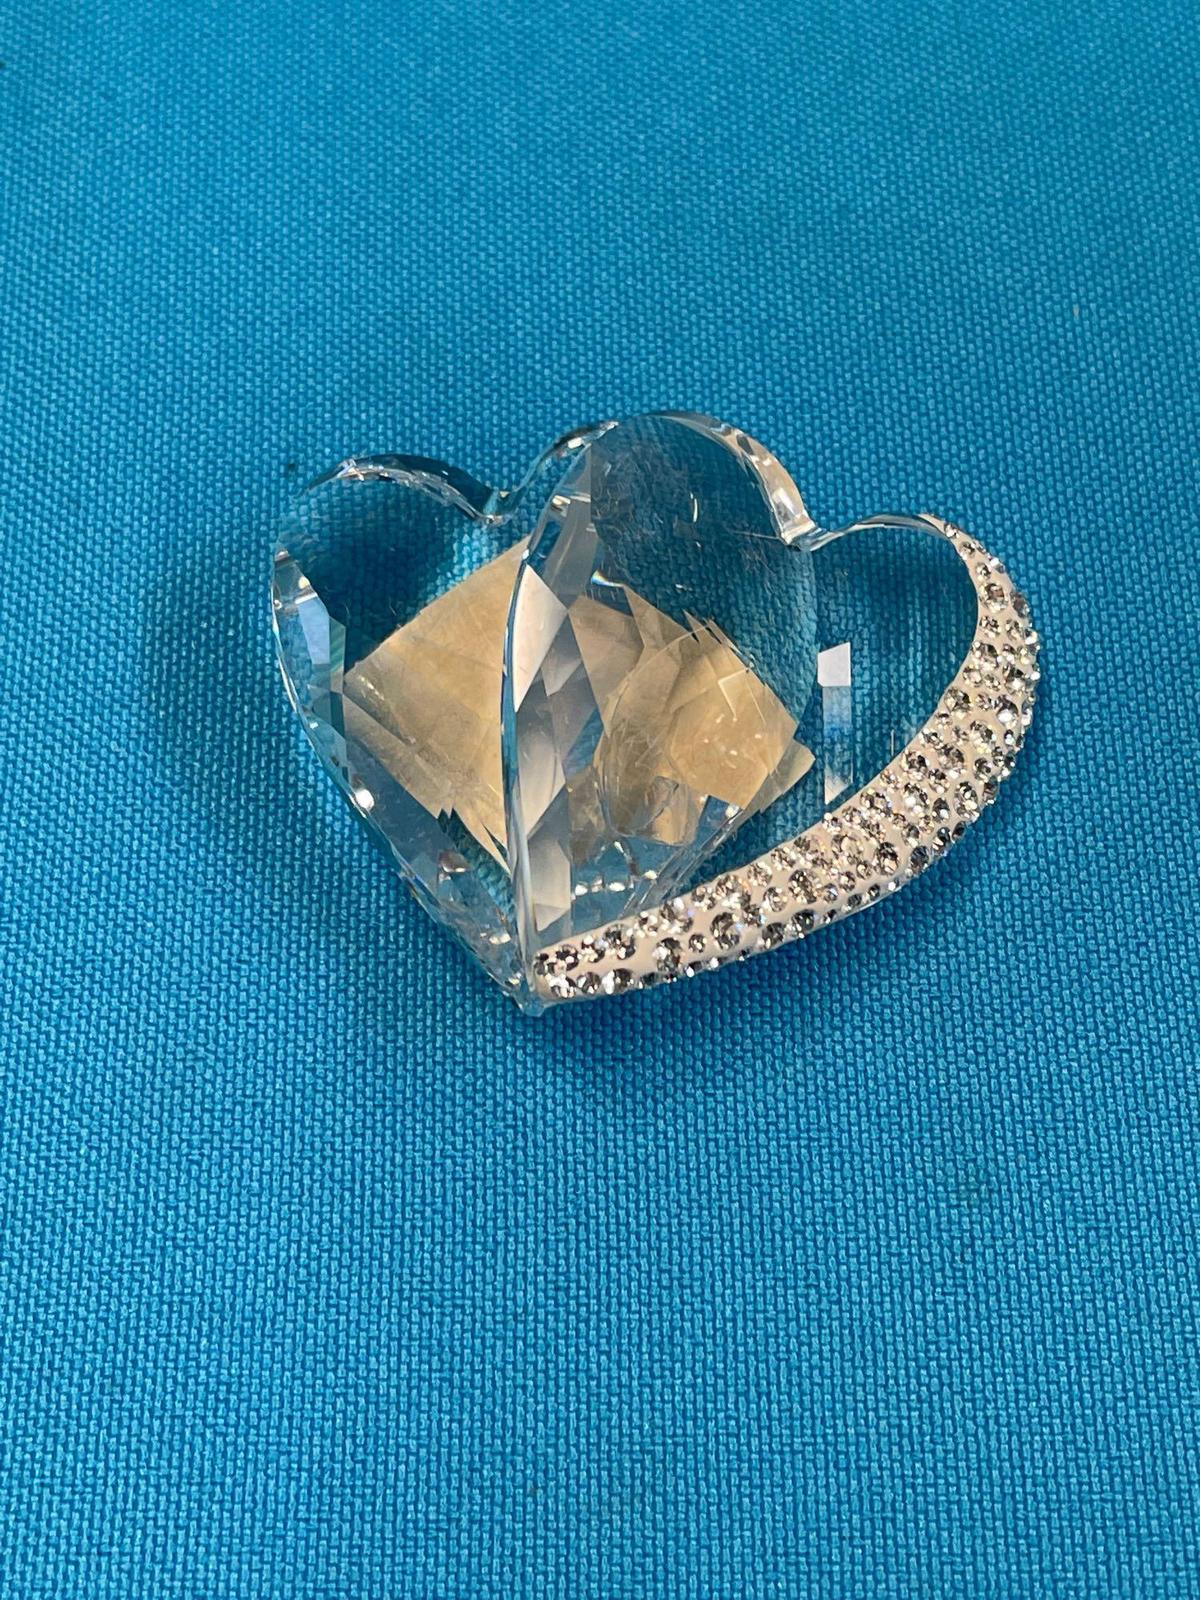 Swarovski crystal loving hearts with box